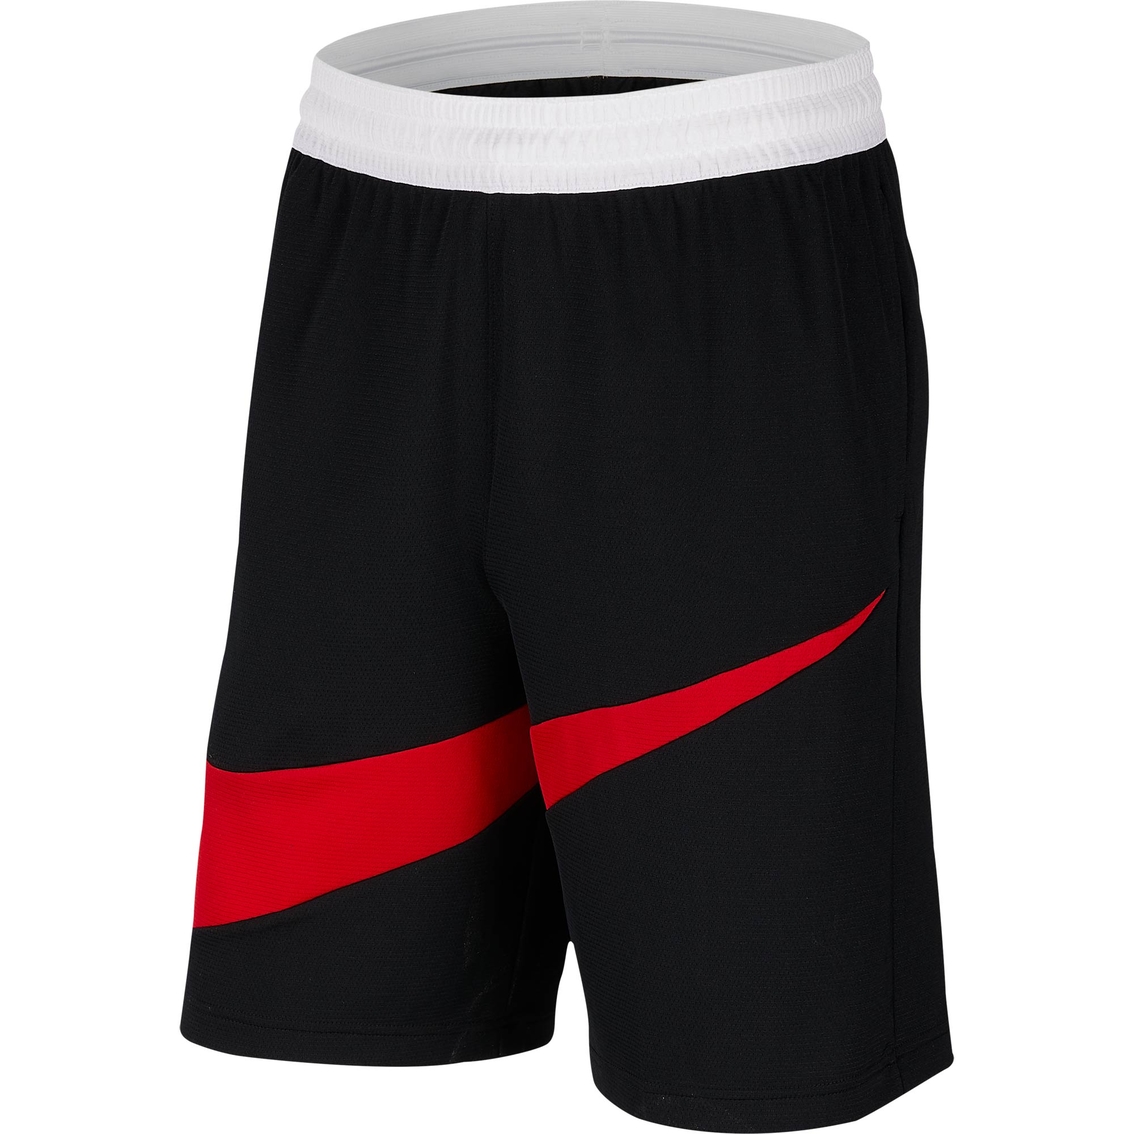 Nike Dri Fit Hbr Basketball Shorts 2.0 | Shorts | Clothing ...